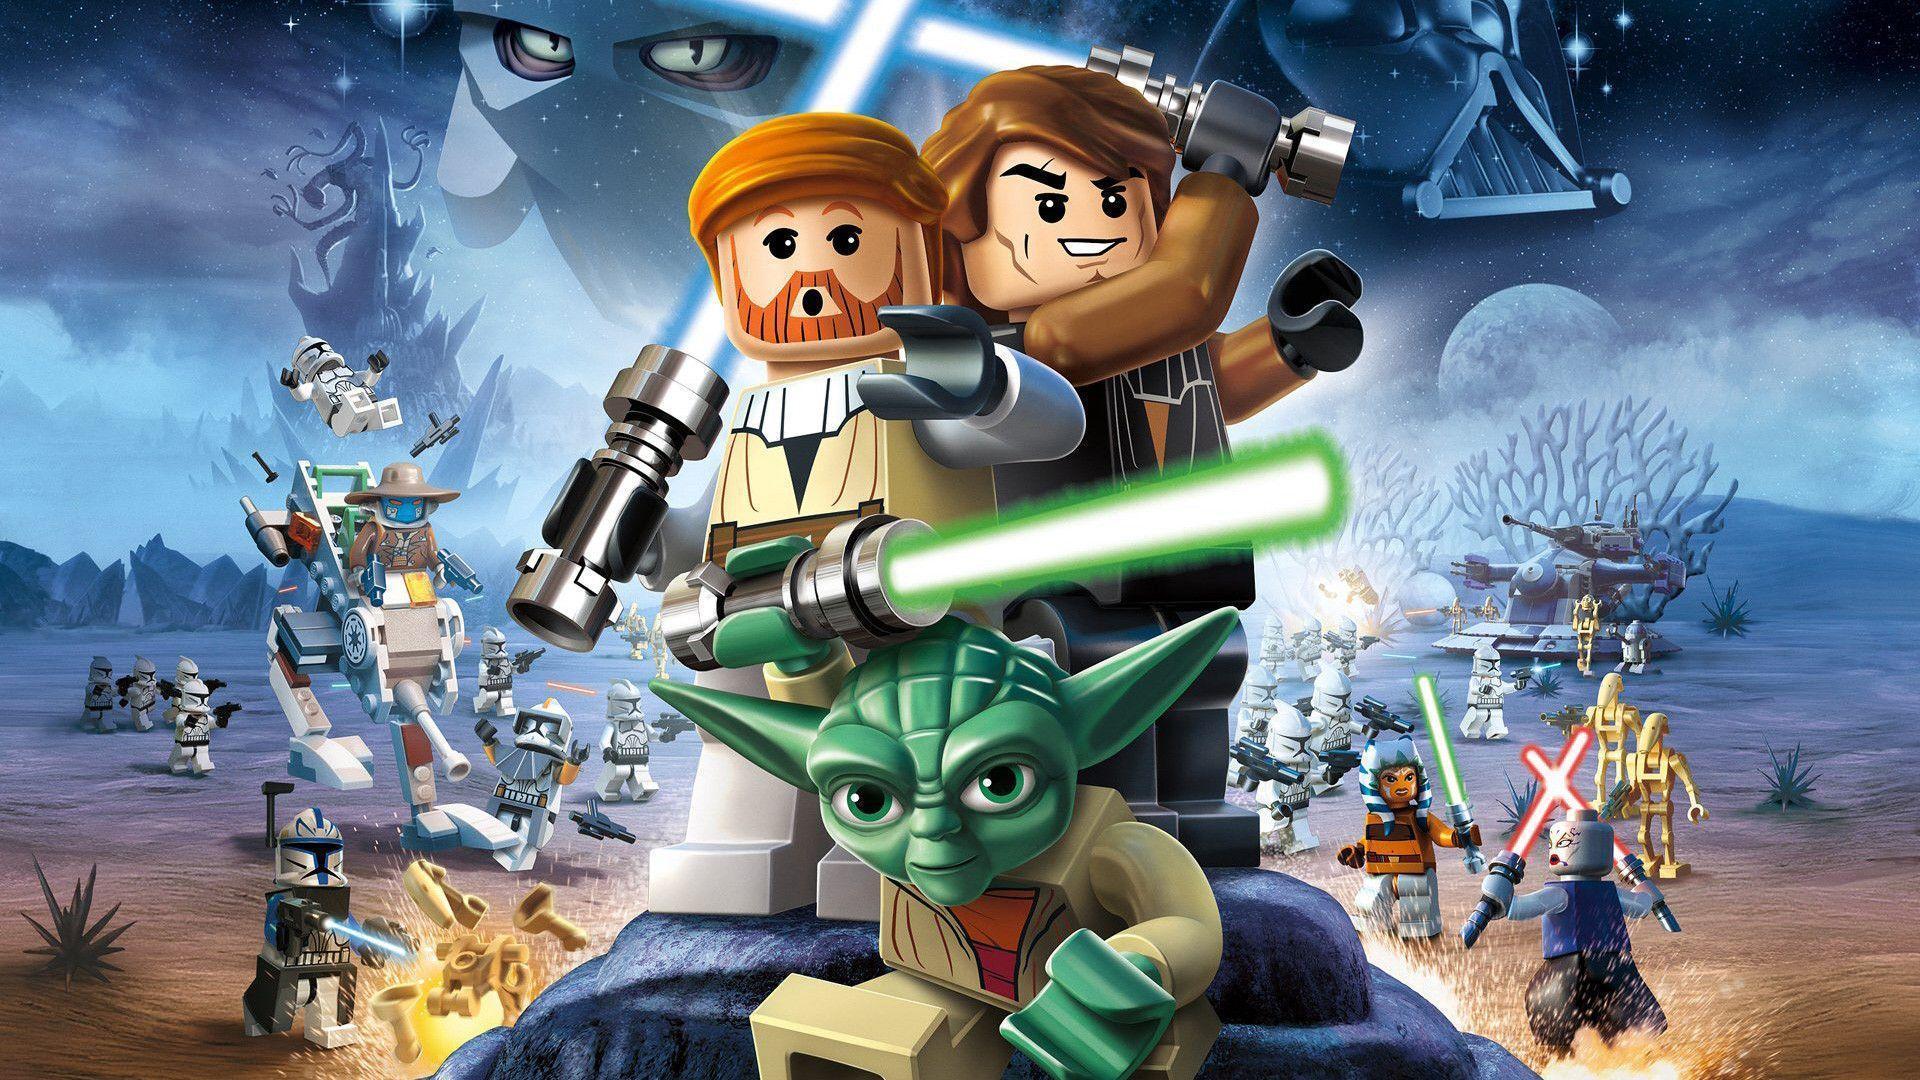 Free Lego Star Wars III: The Clone Wars Wallpaper in 1920x1080